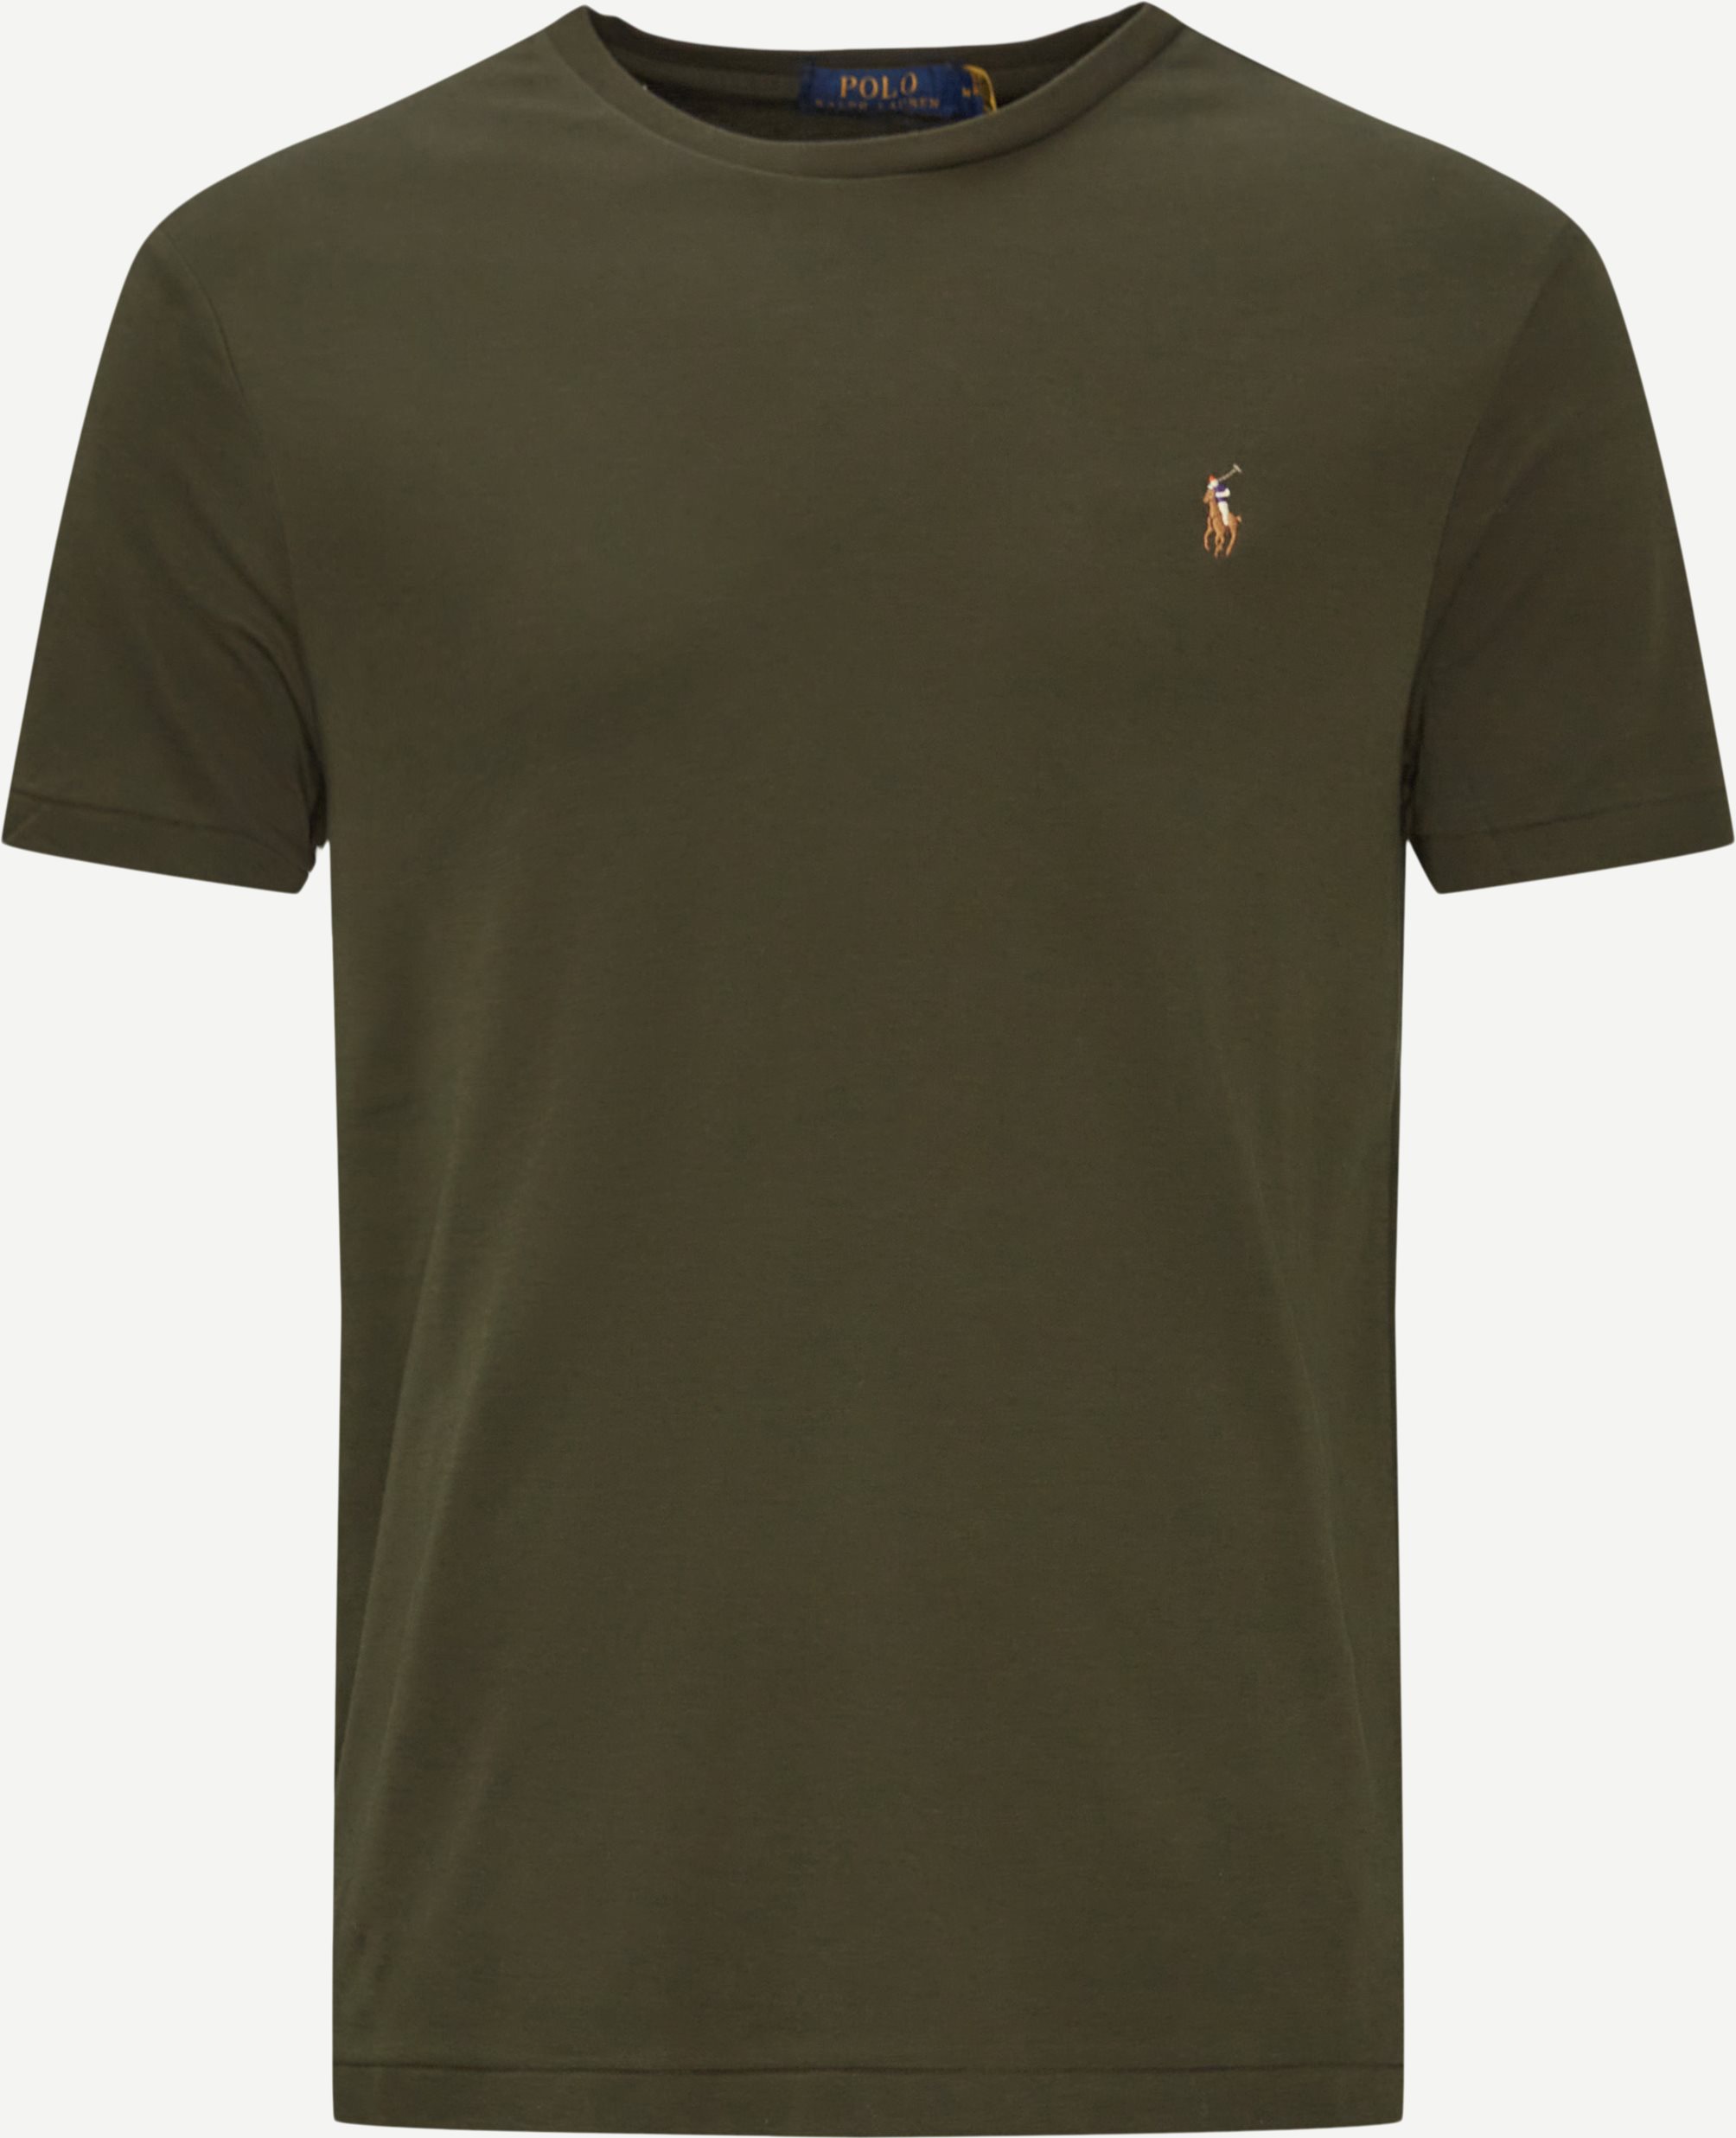 T-shirts - Regular slim fit - Army